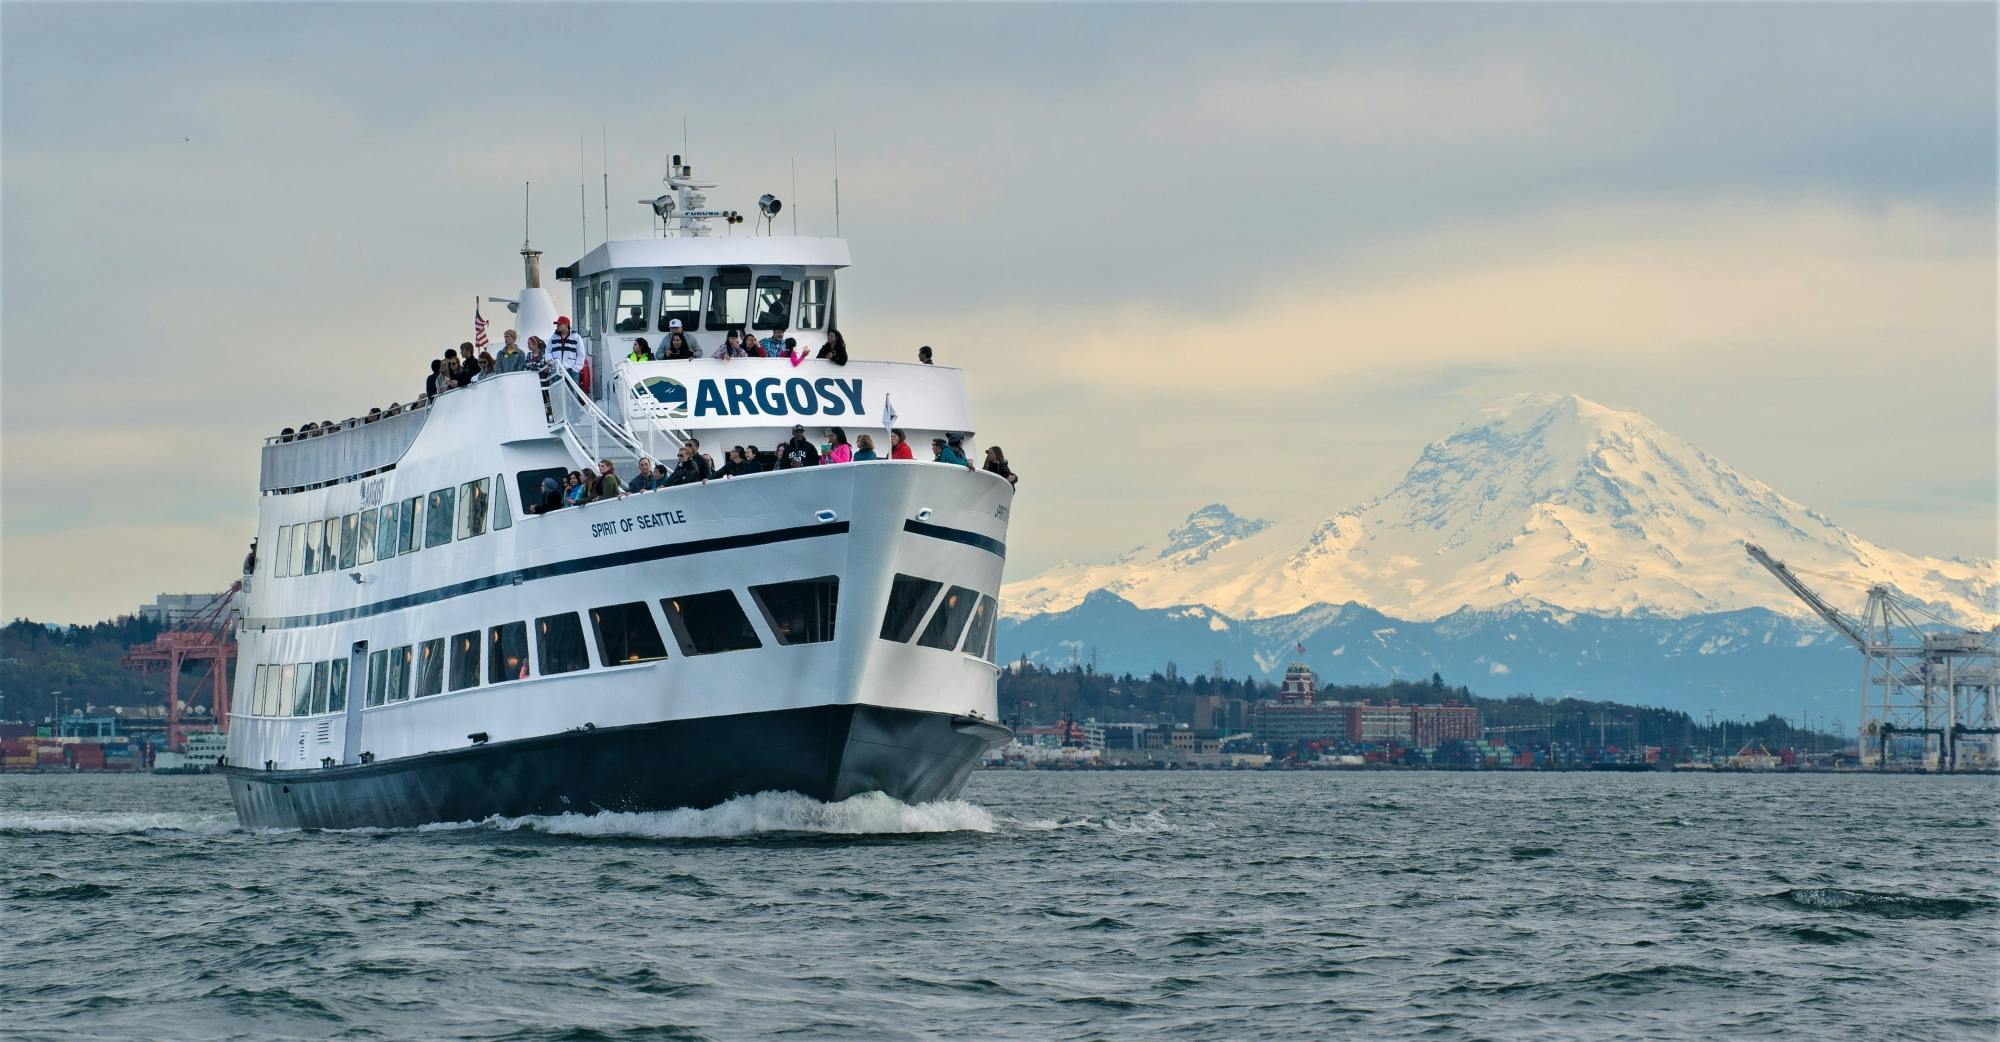 Seattle Harbor cruise tour